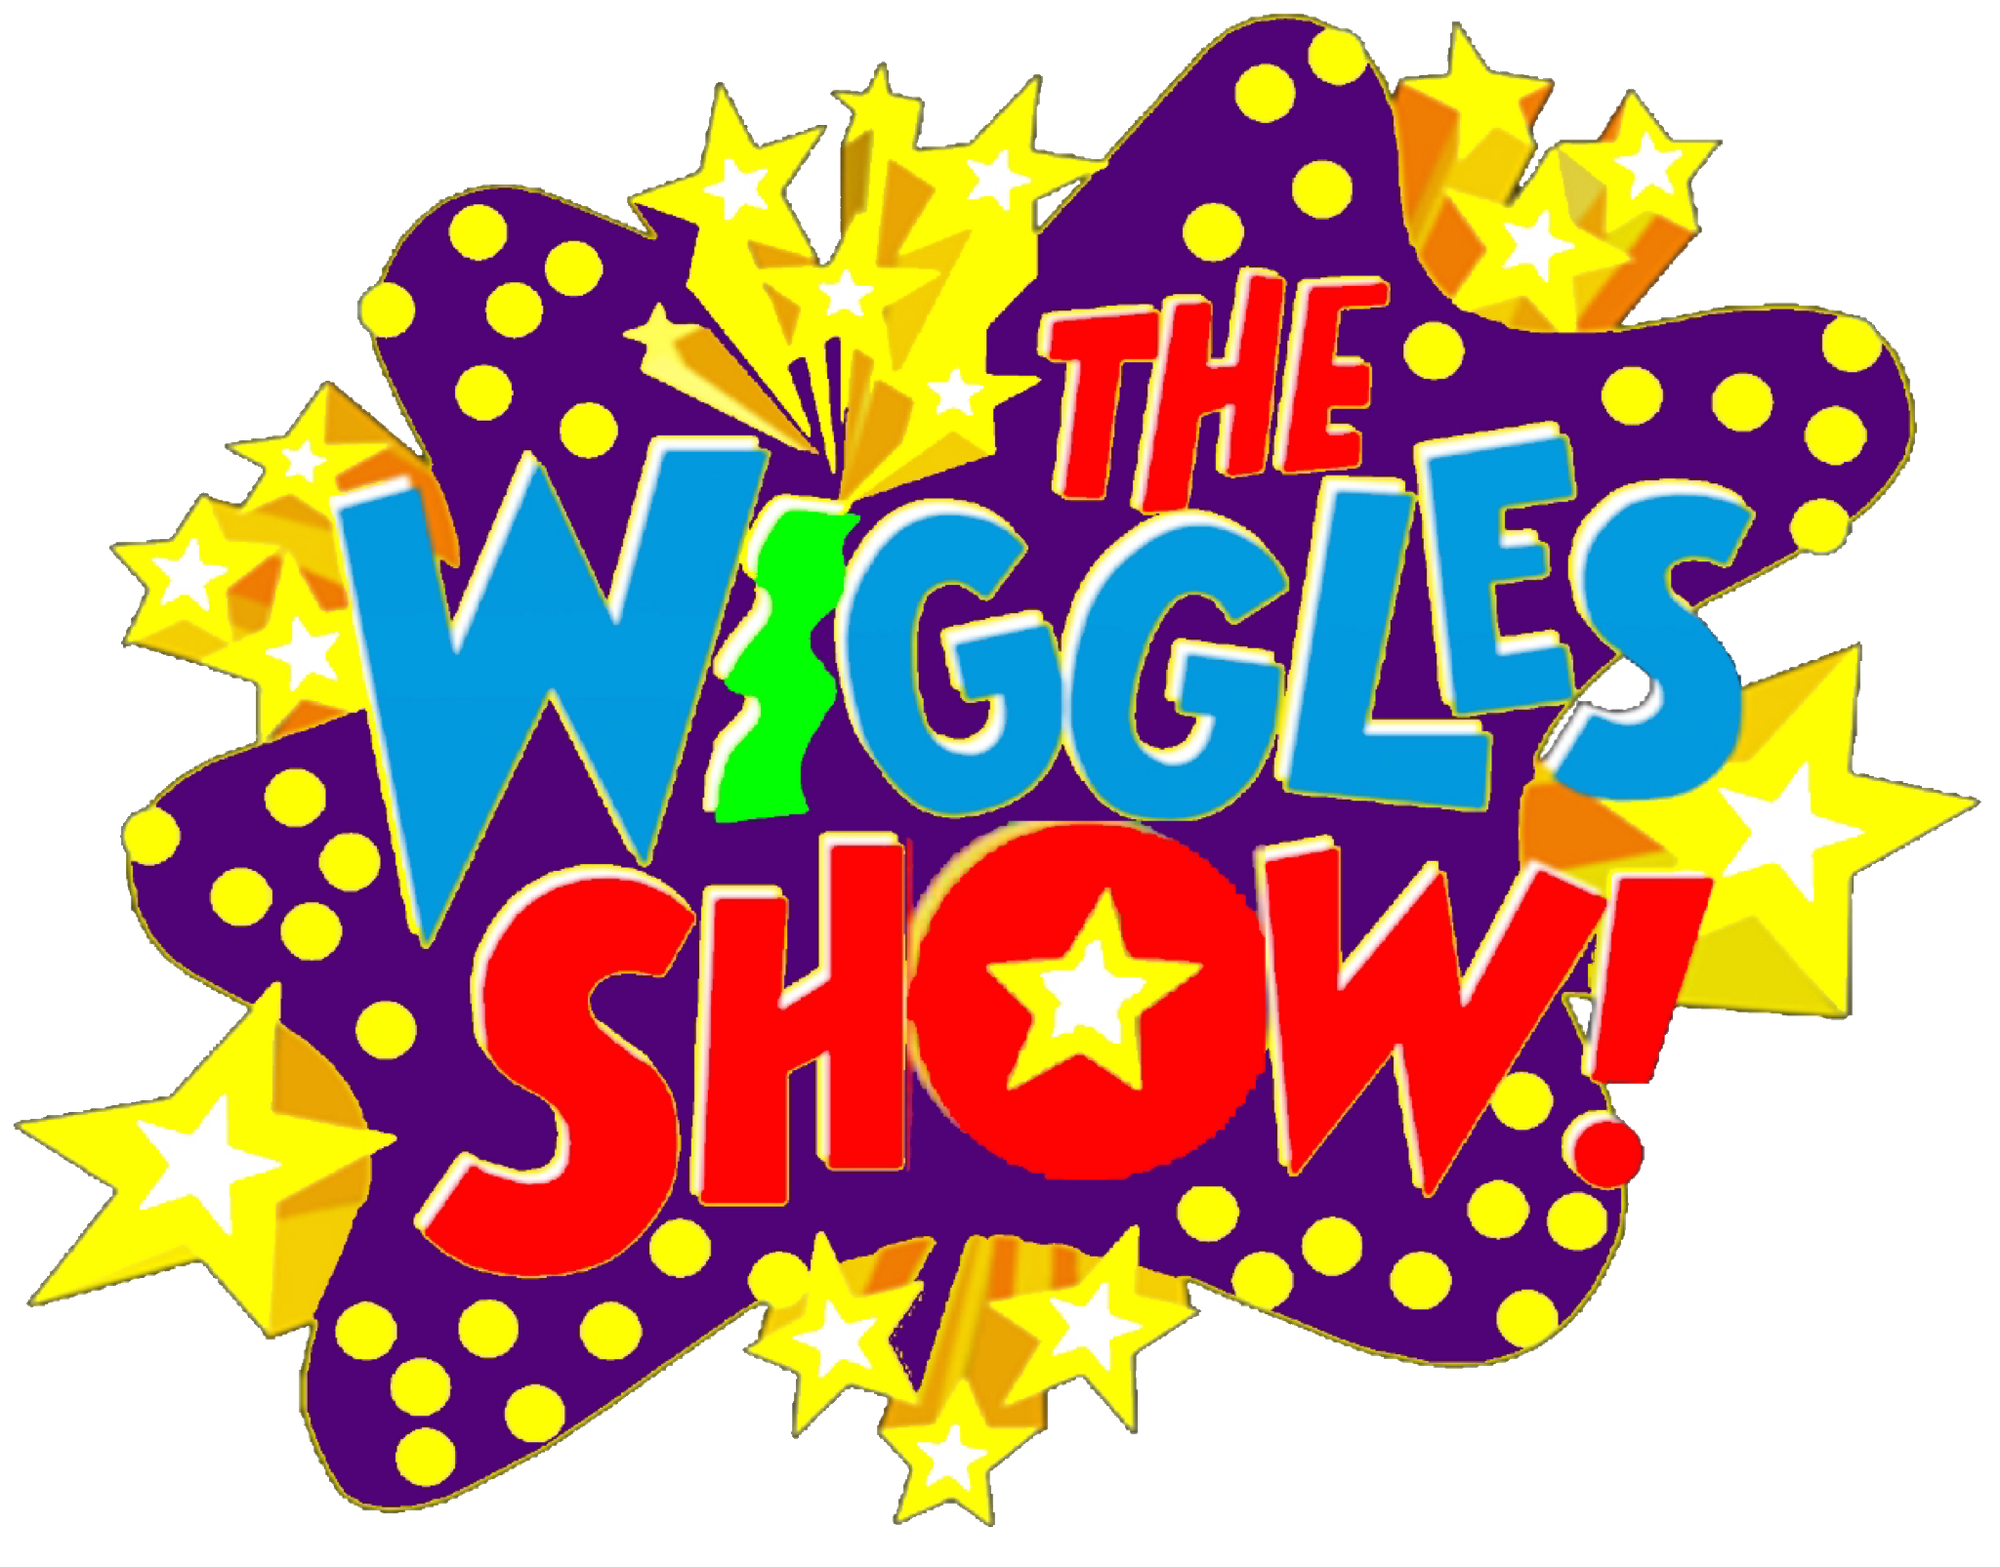 The Wiggles Show Logopedia Fandom Powered By Wikia